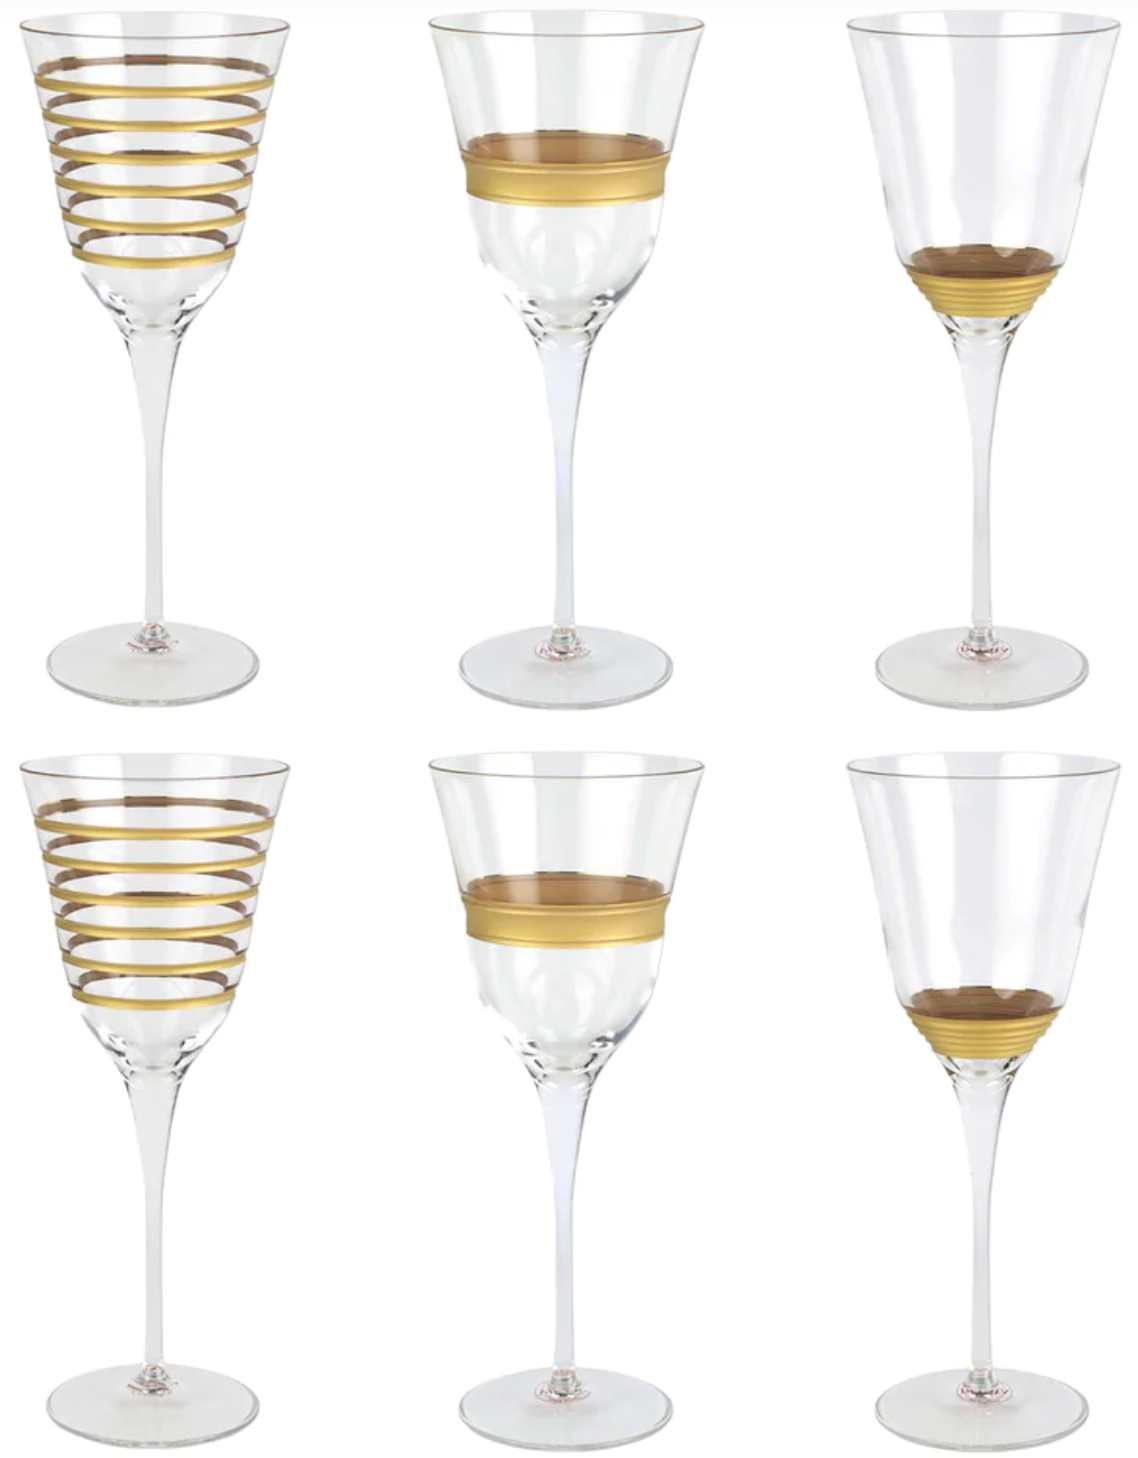 RAFFAELLO ASSORTED WINE GLASSES - SET OF 6